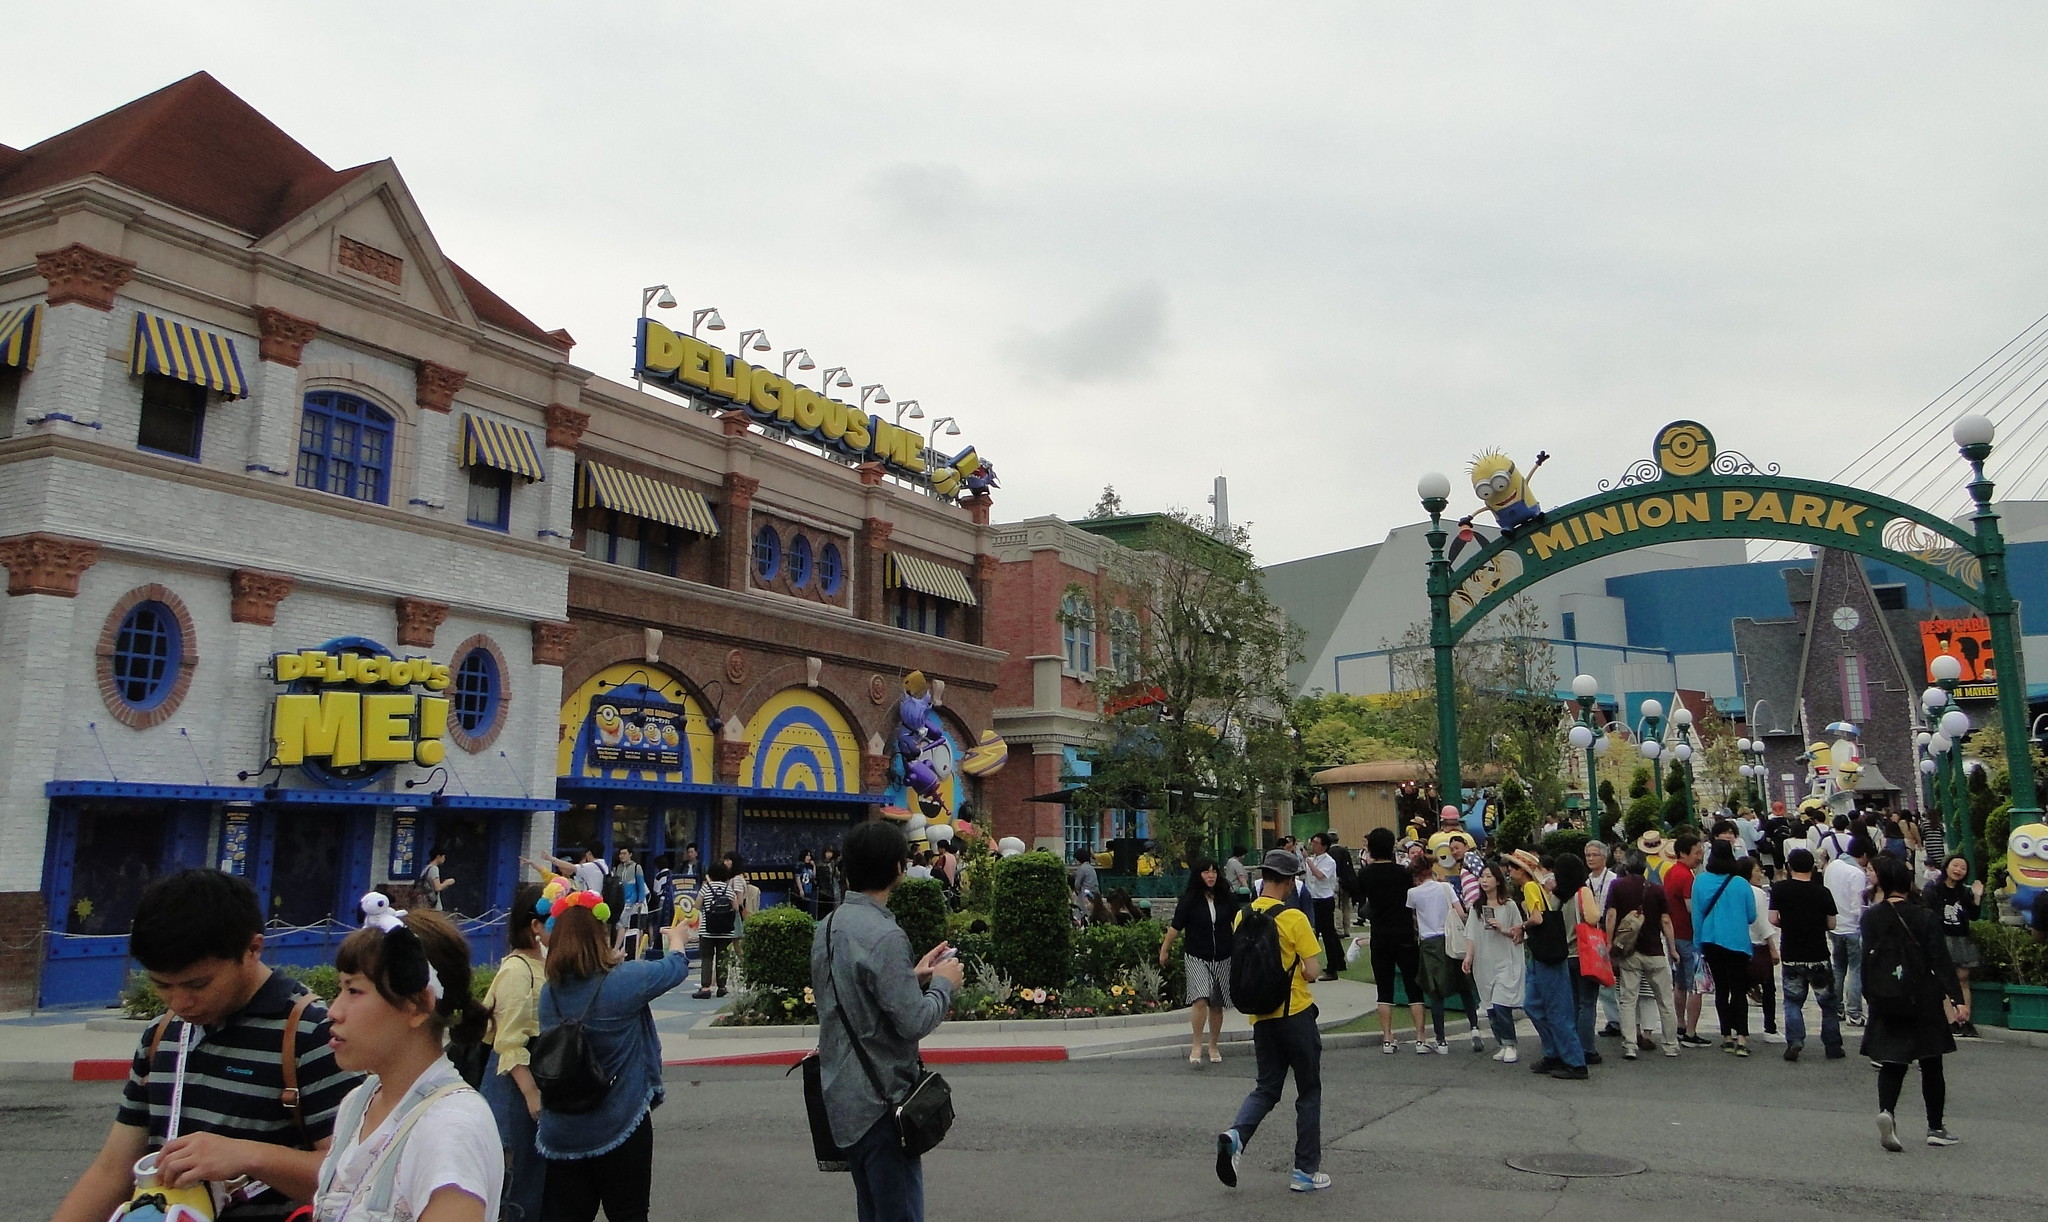 Minion Park at Universal Studios Japan